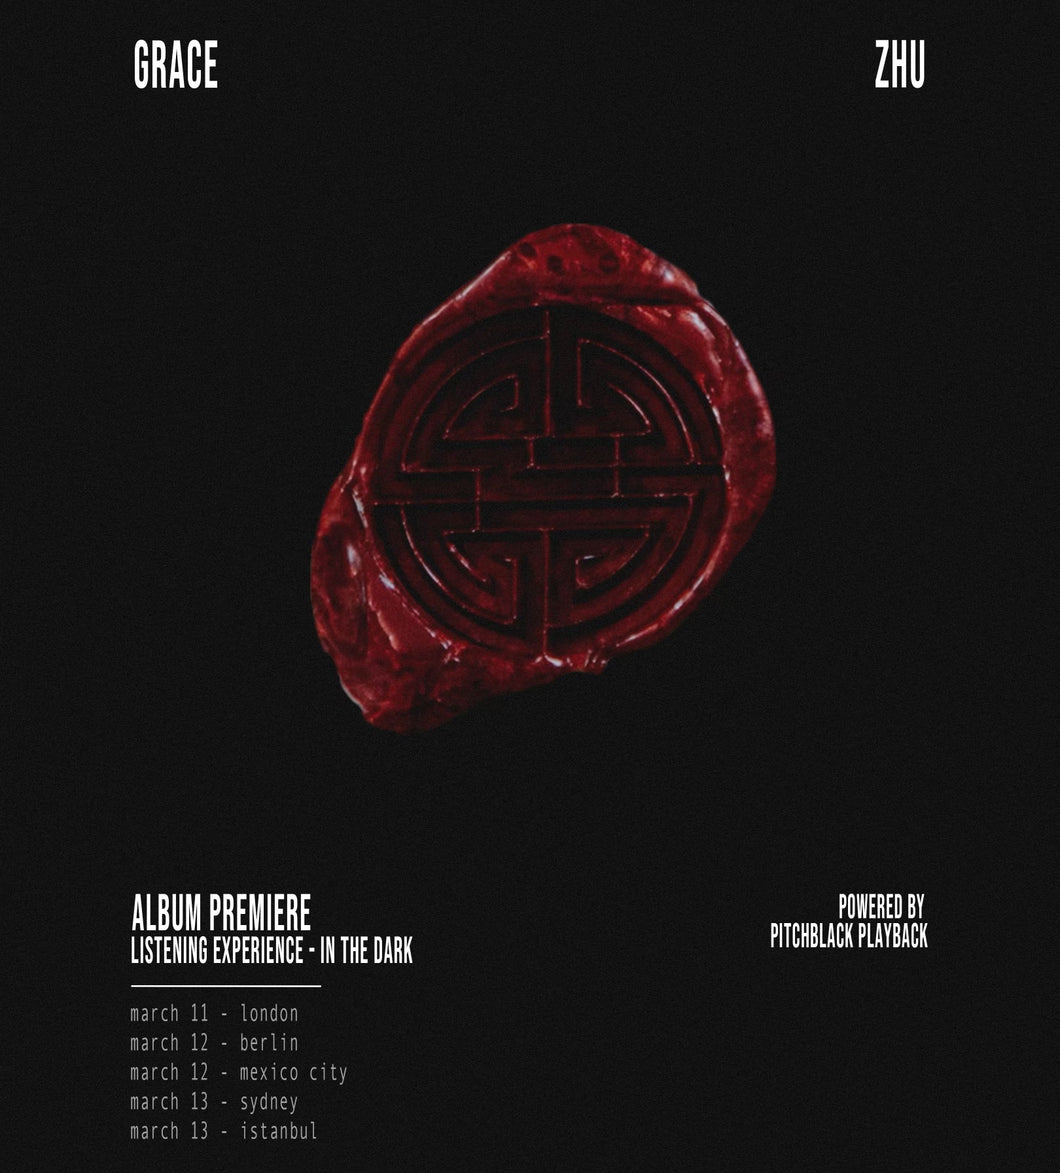 London: ZHU 'GRACE' album listening premiere in the dark - Monday 11 March 7:30PM @ Soho Hotel Screening Room 2